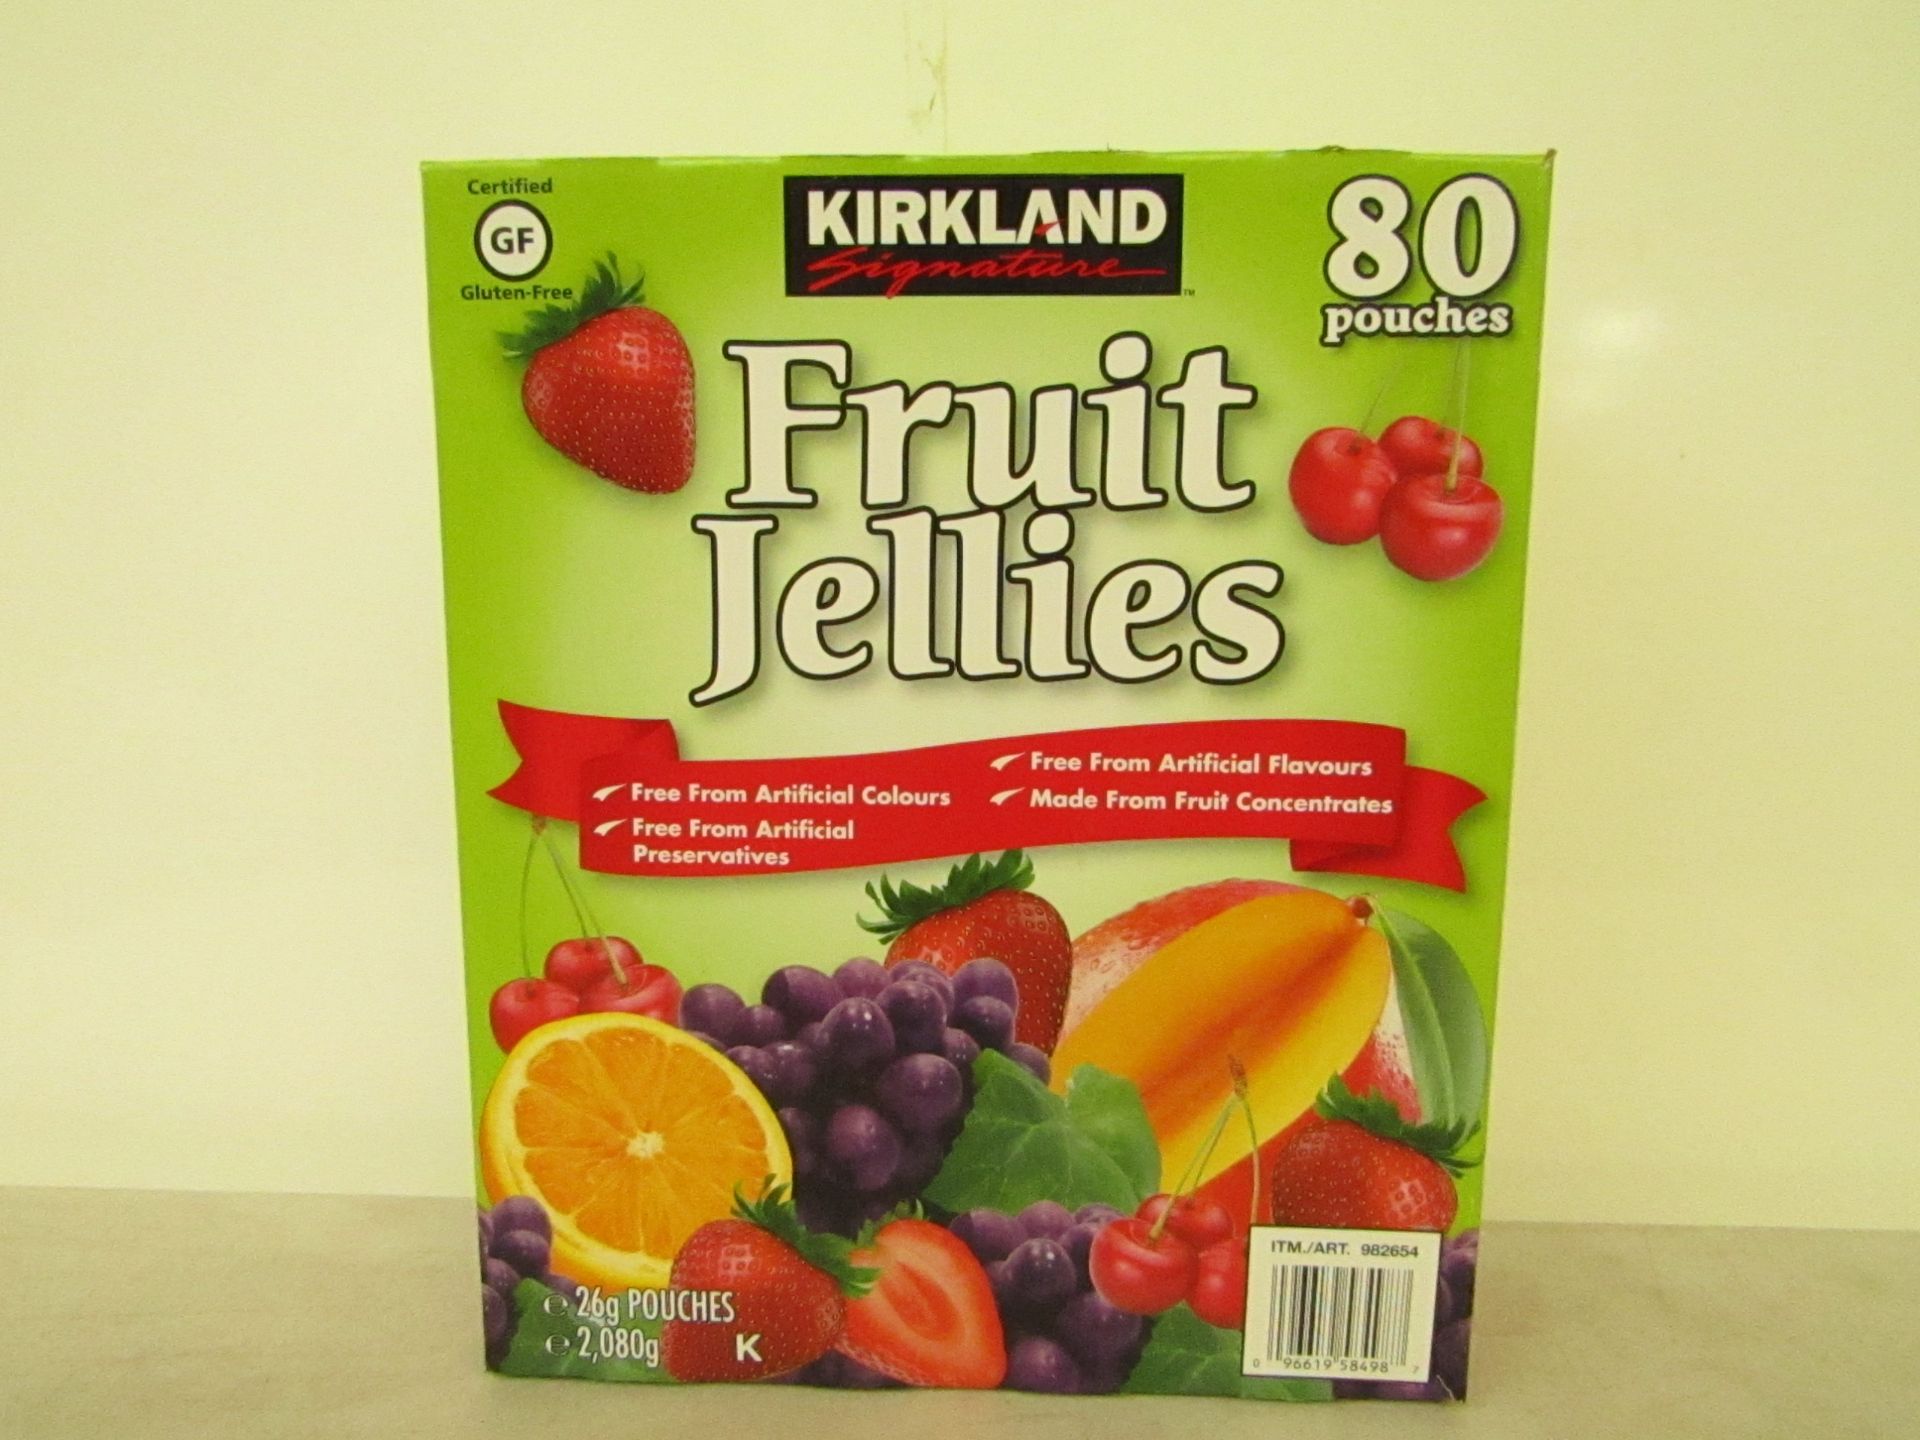 Kirkland signature box of 80 fruit jellies pouches, best by 28th April 2017.